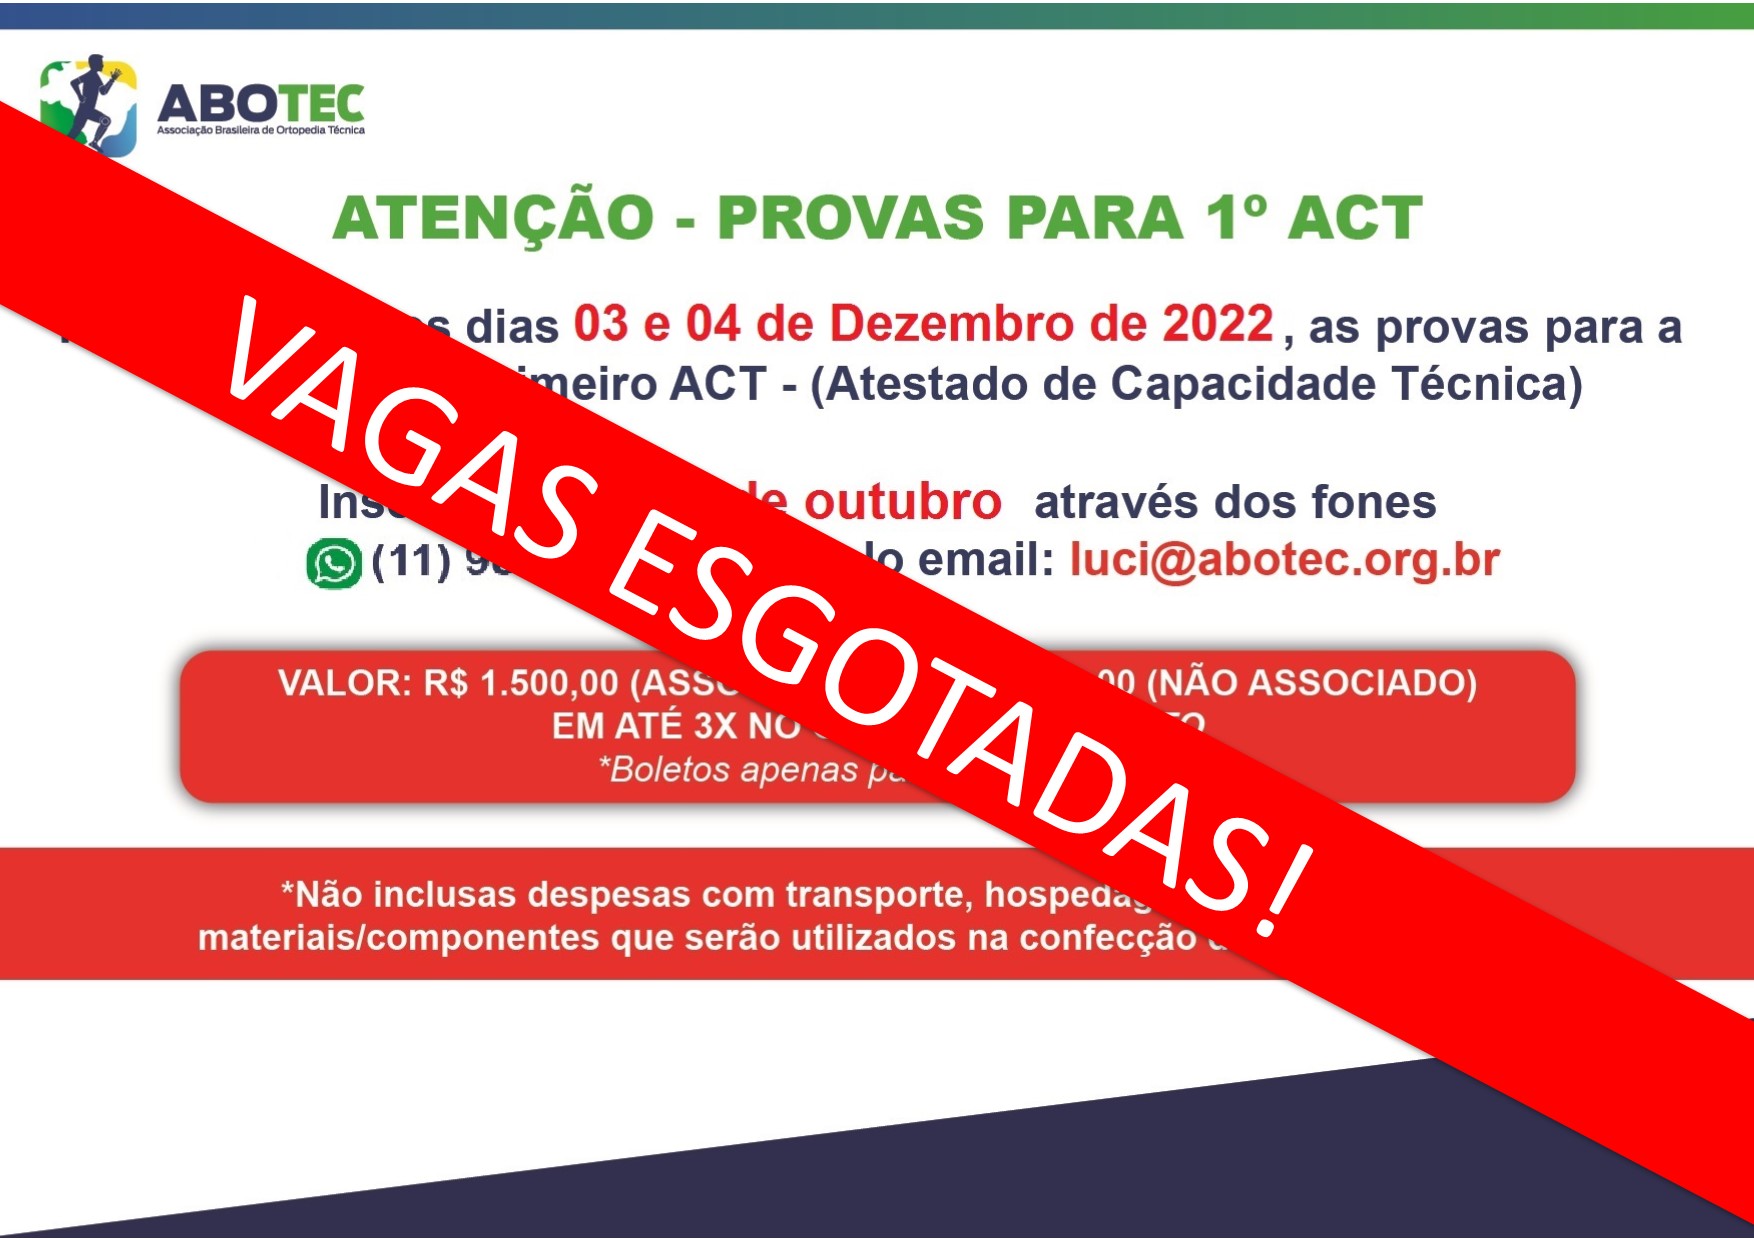 ACT - ABOTEC